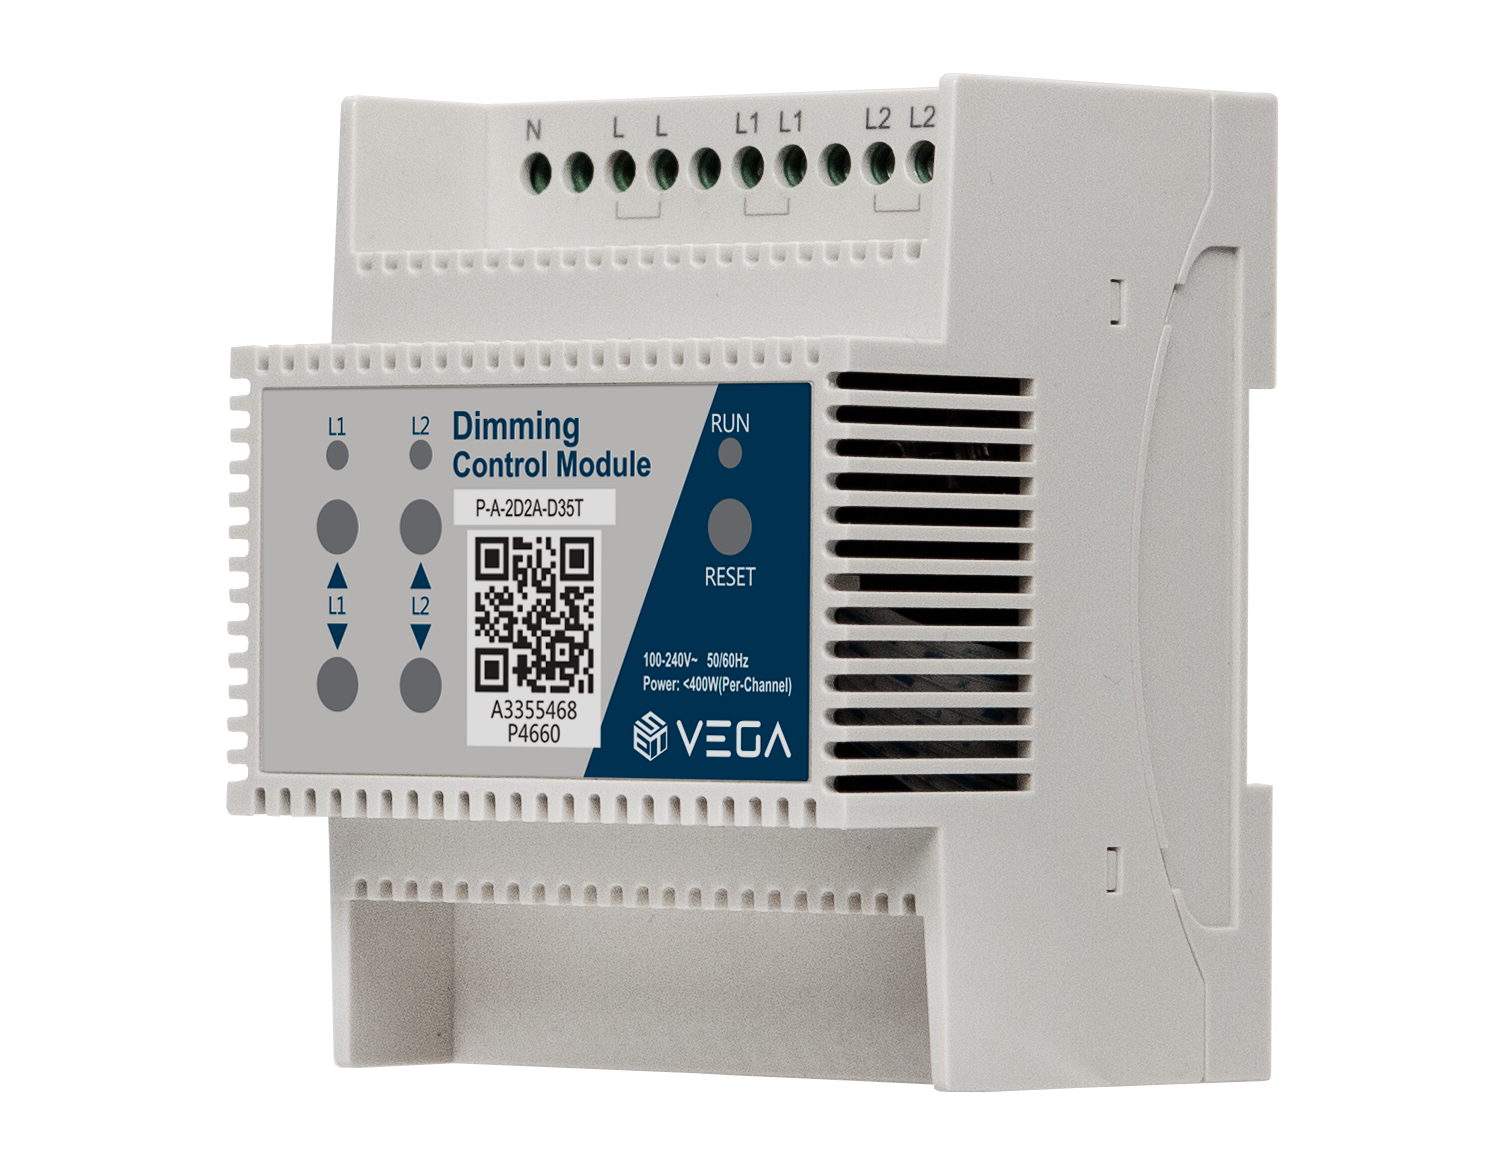 VEGA 秝業系統科技 BA 調光控制器 P-A-2D2A-D35T